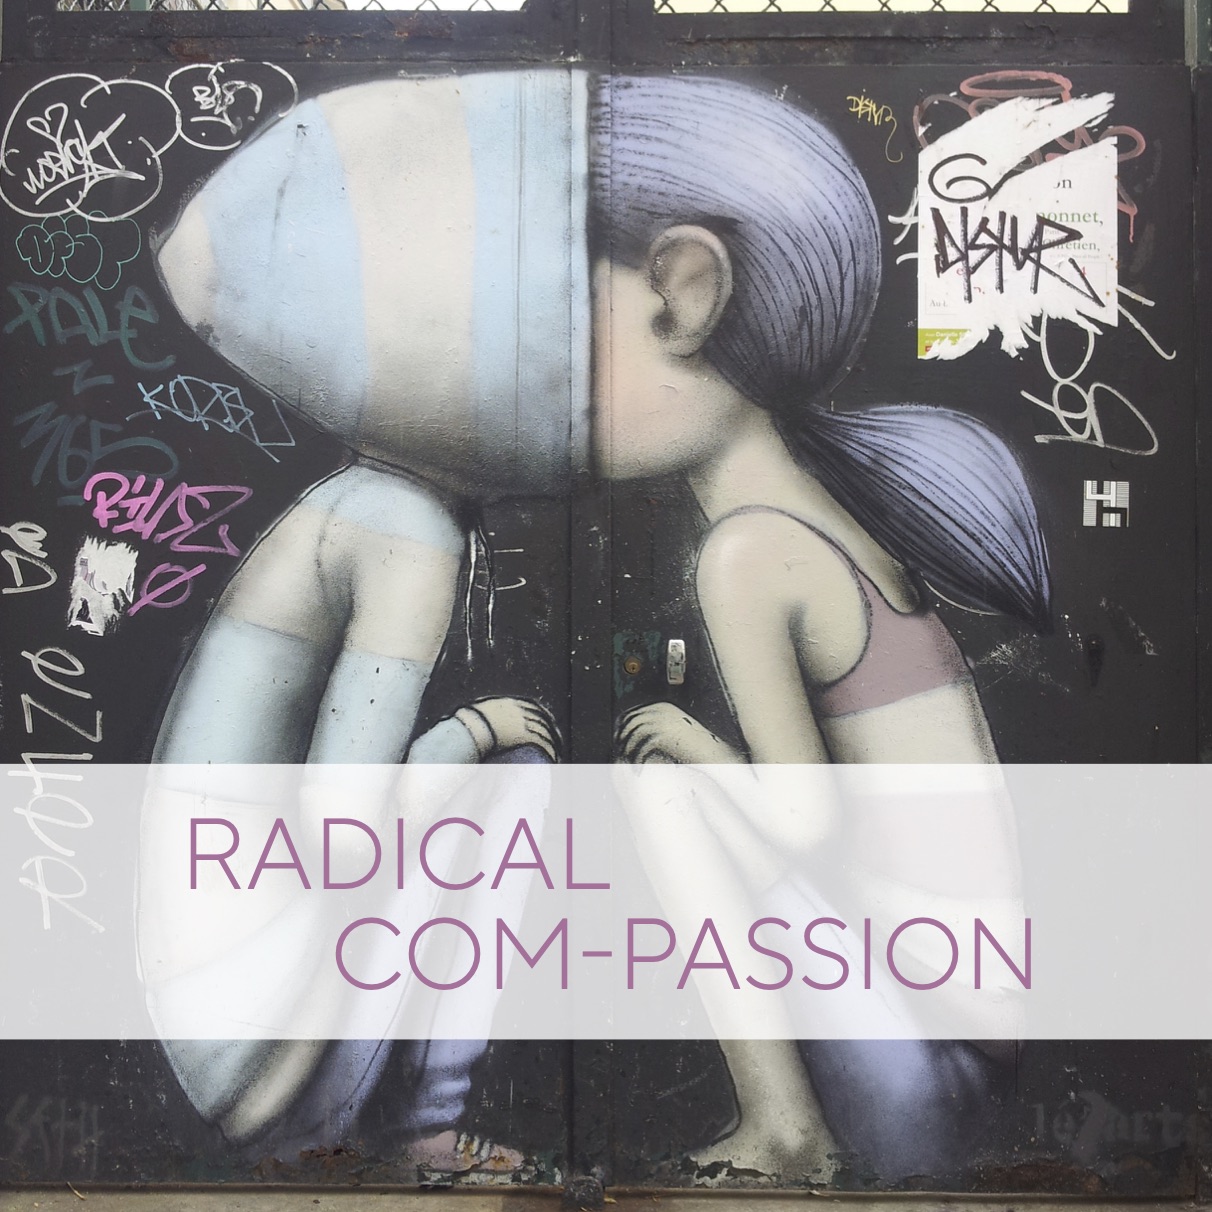 Radical Com-Passion (New Work Radicalism #3)